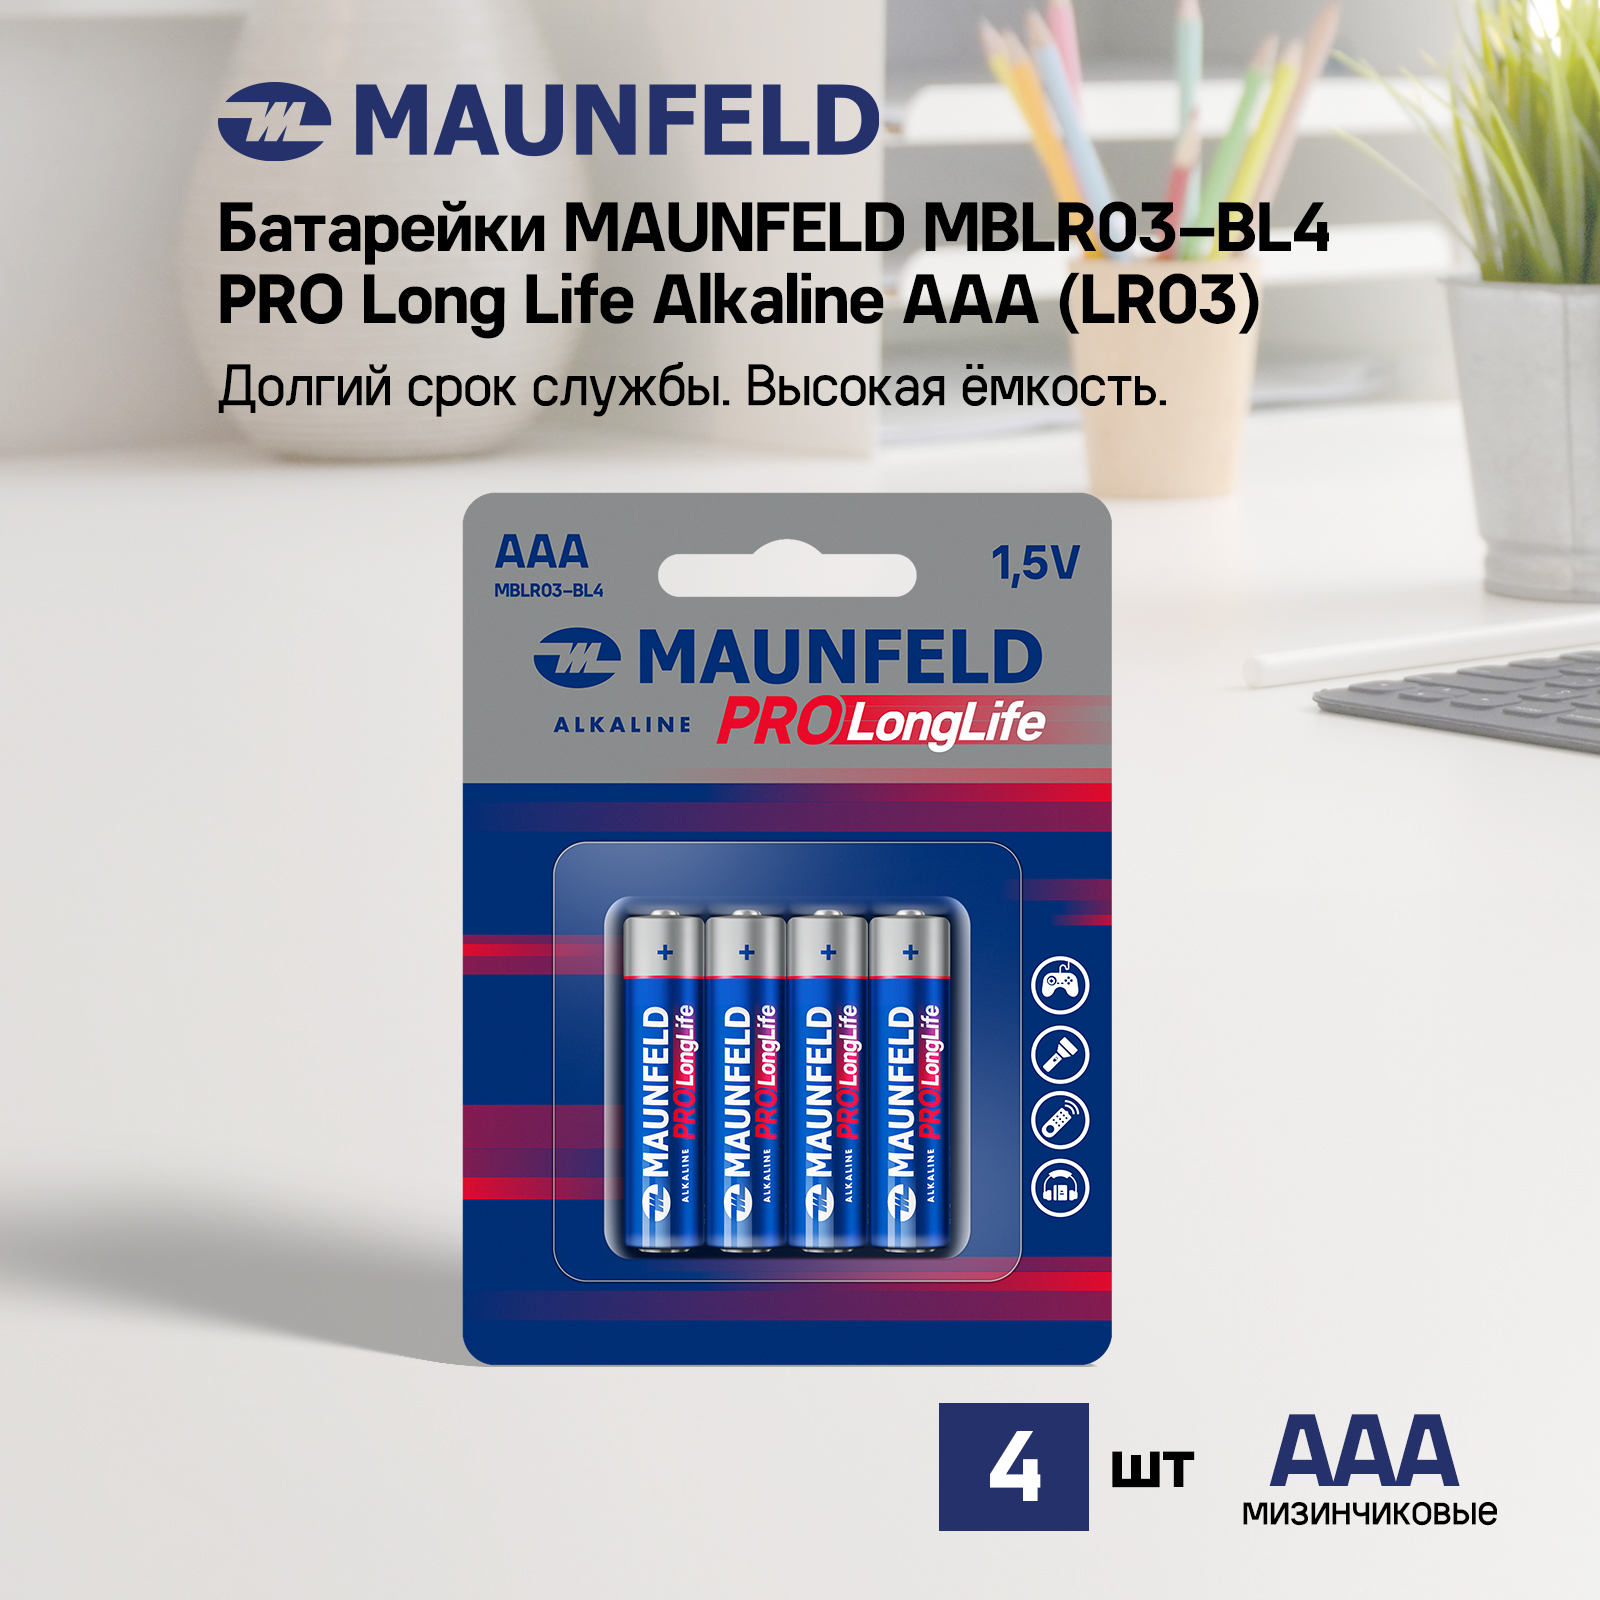 Батарейки MAUNFELD PRO Long Life Alkaline ААА(LR03) MBLR03-BL4, блистер 4 шт. казу music life деревянный 9 5 х 2 8 см